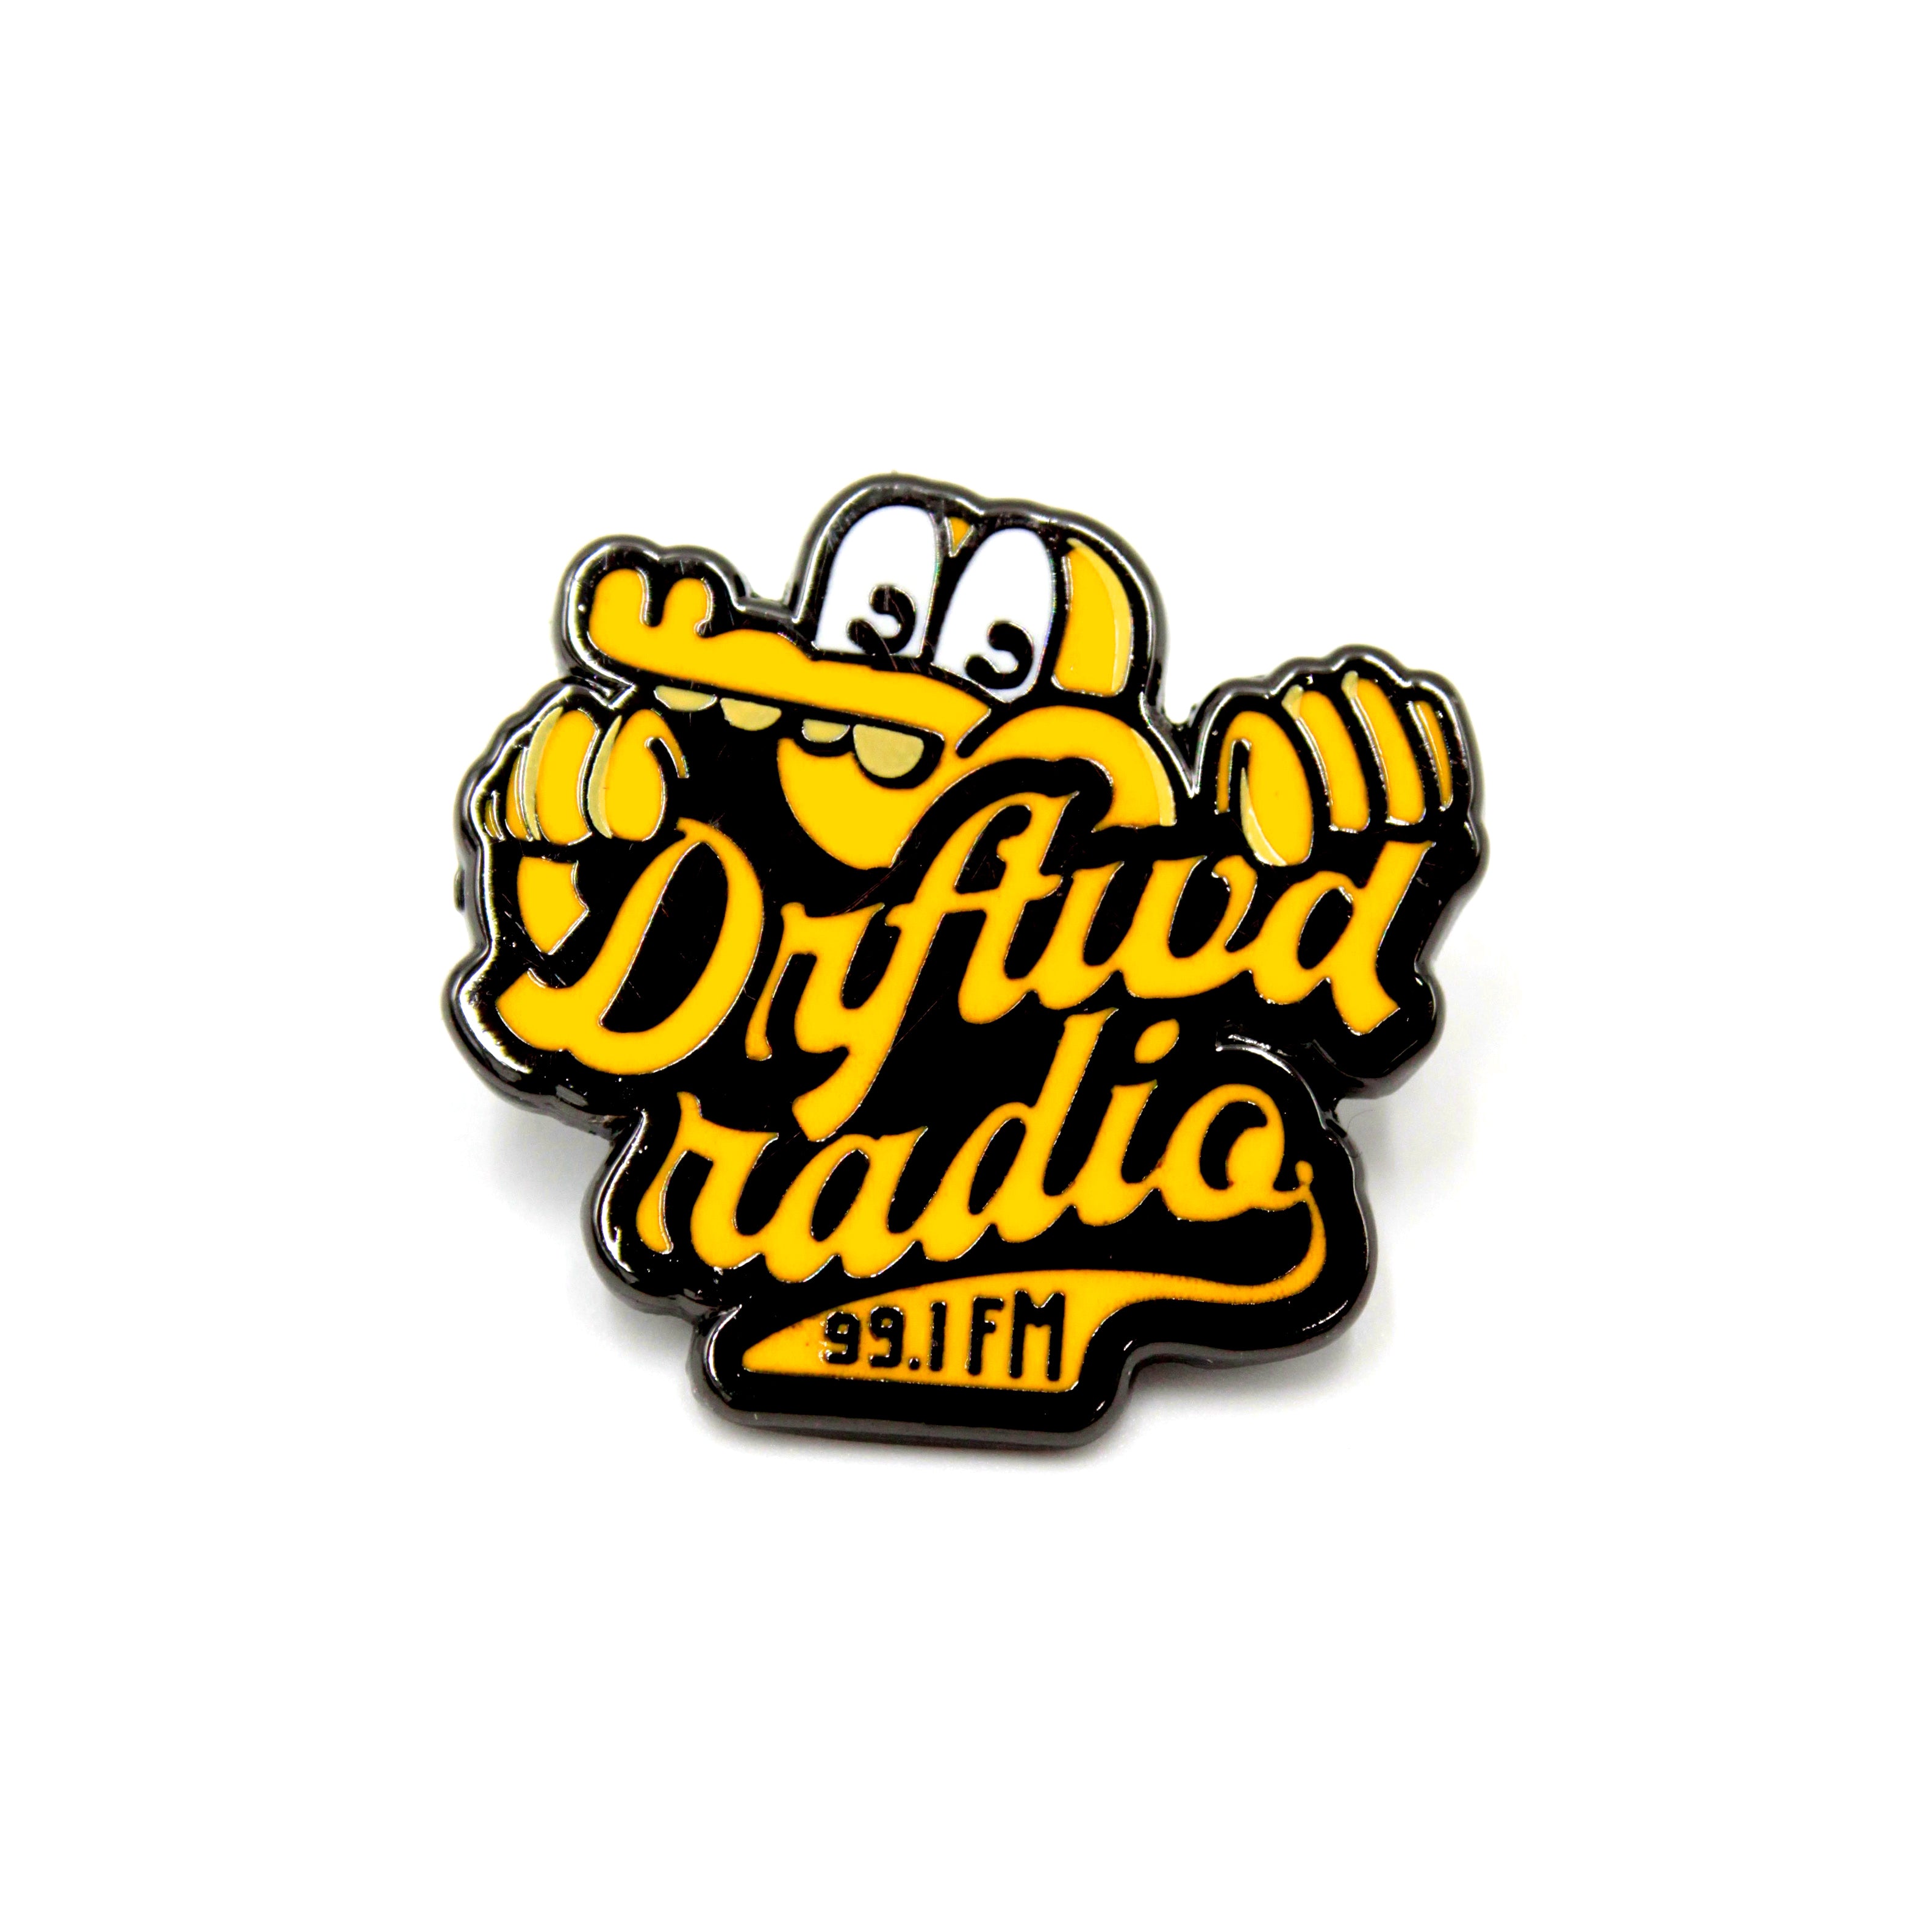 DRFTWD - RADIO 99.1 FM